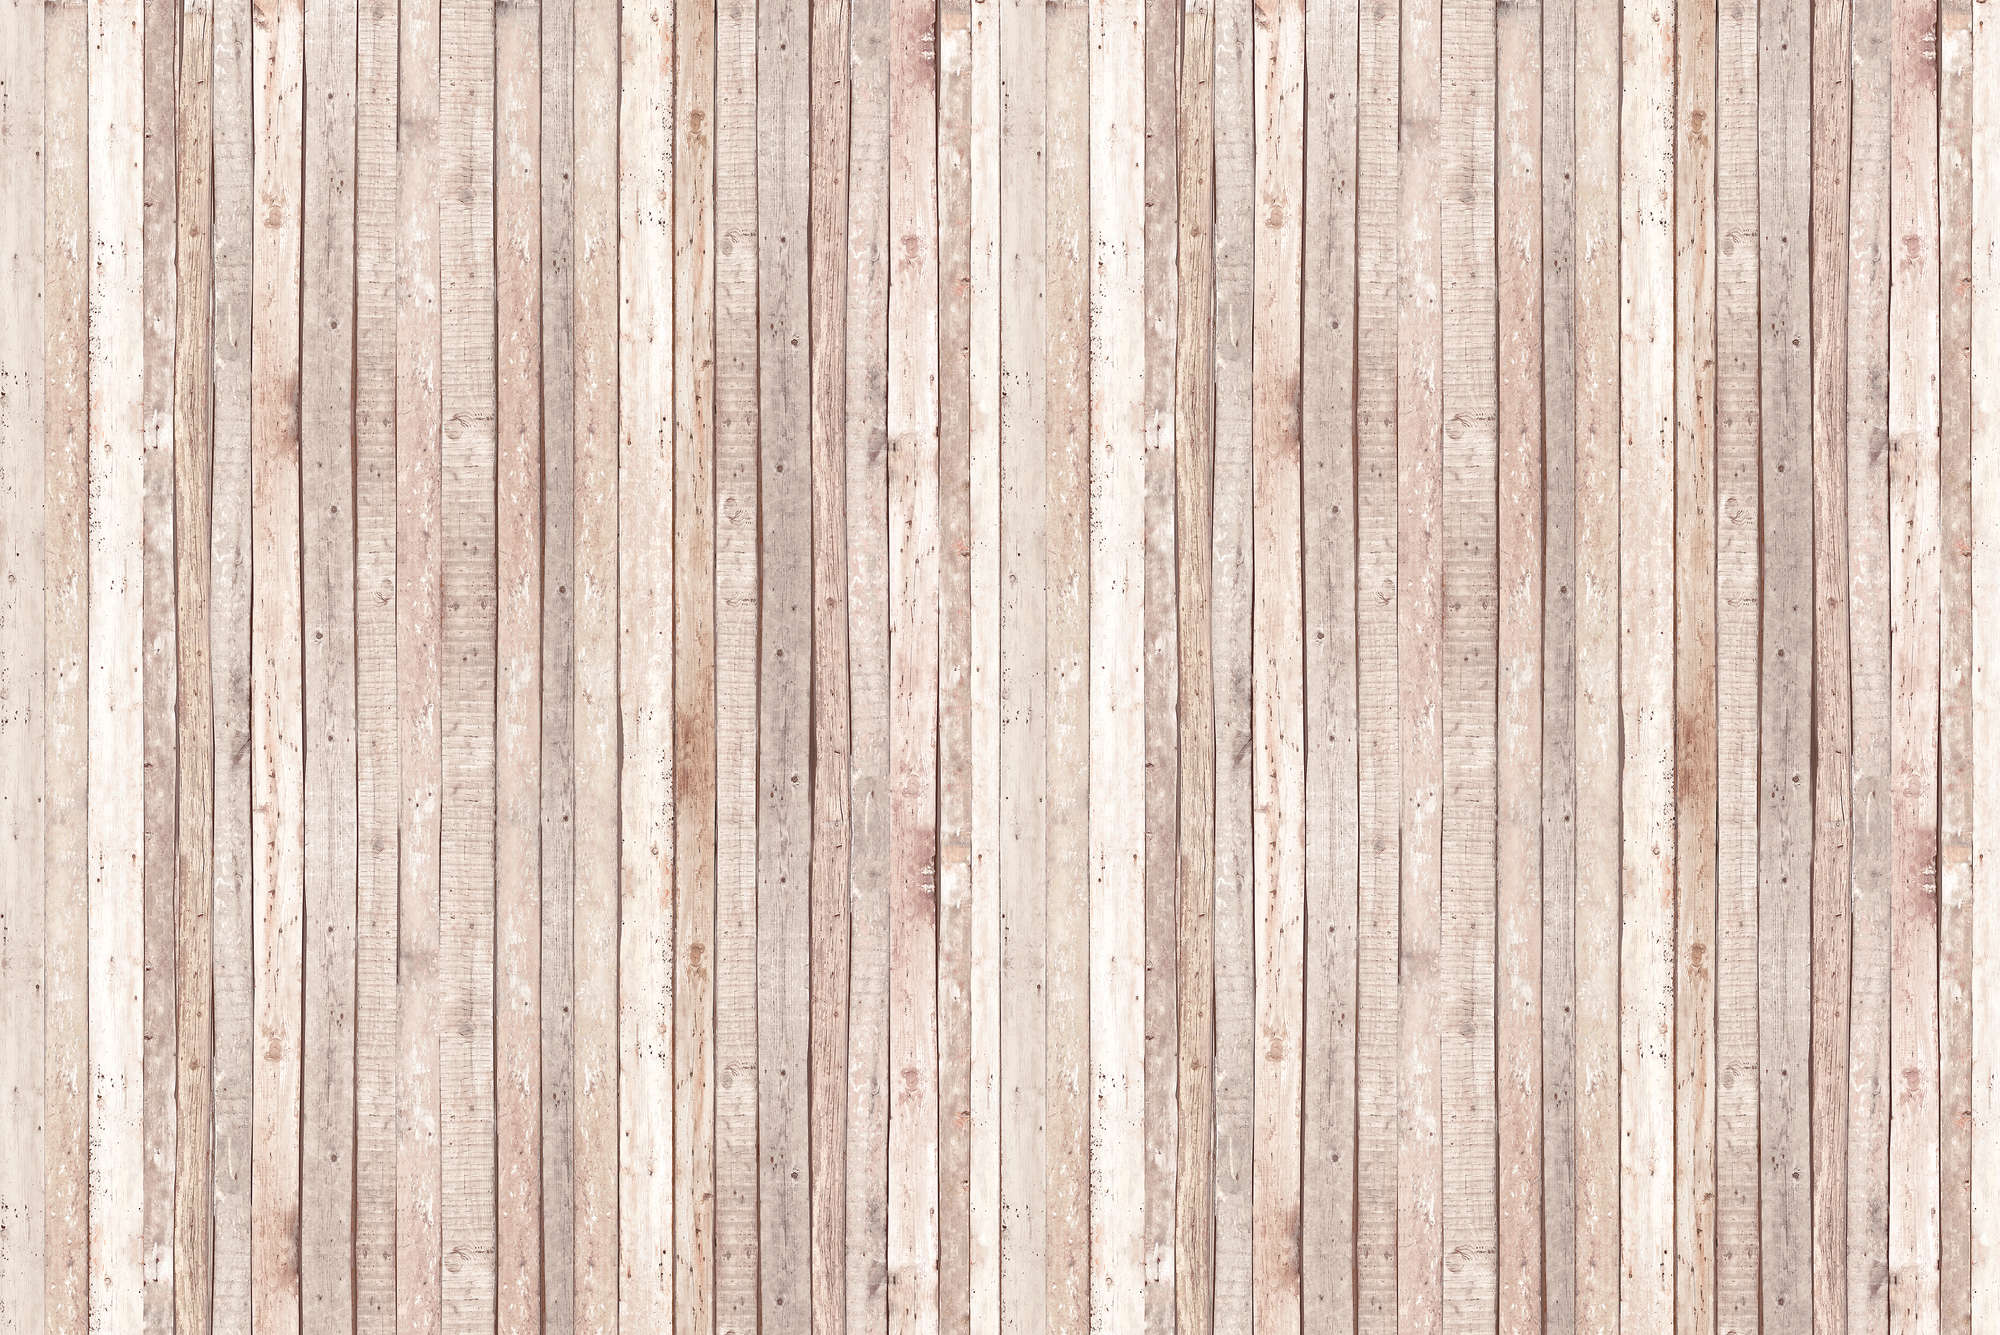             Fototapete Wand aus Holzbrettern – Premium Glattvlies
        